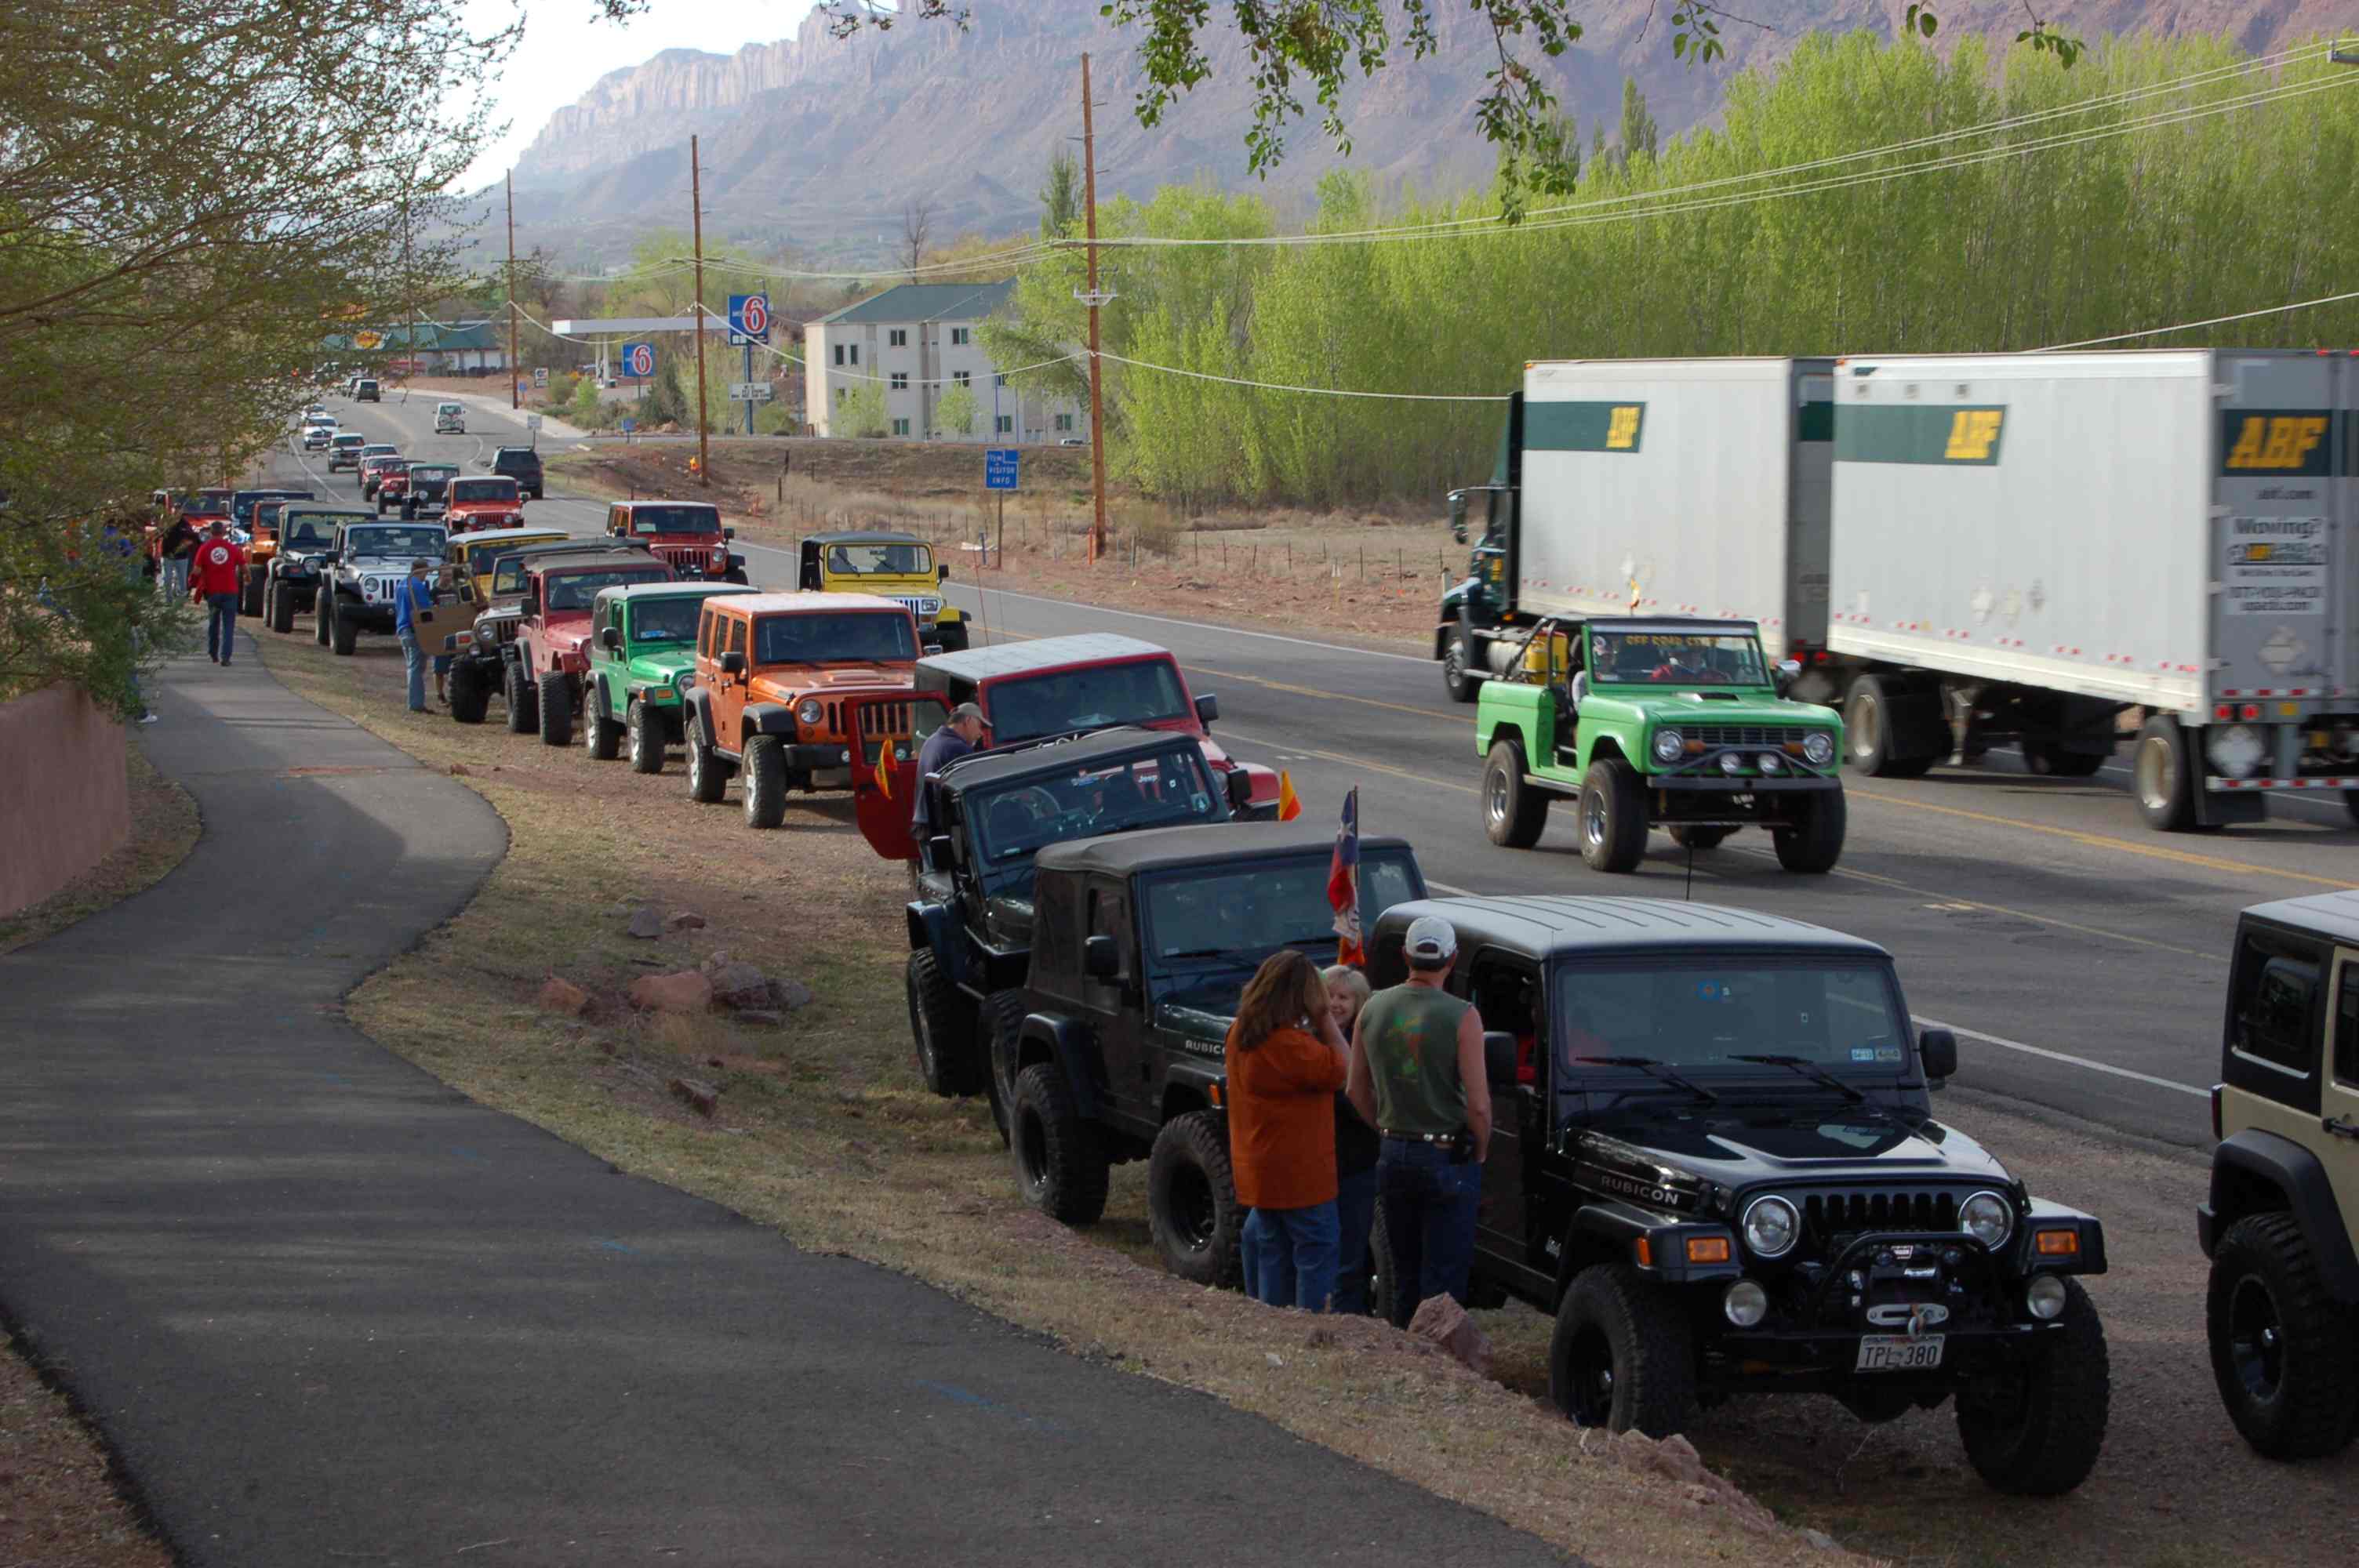 Moab jeep week #1